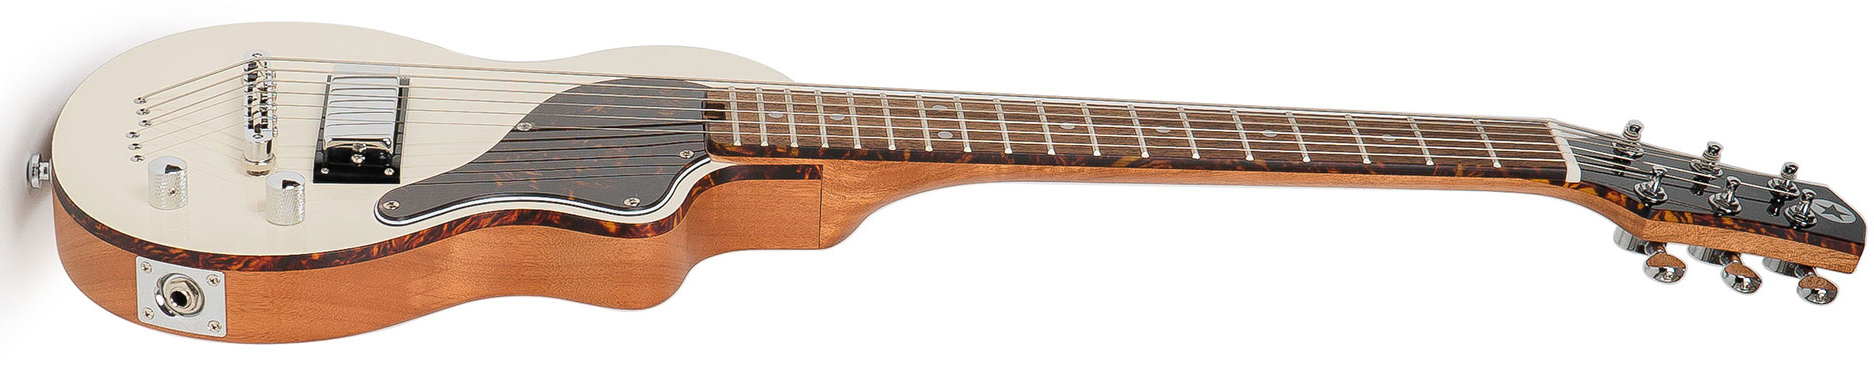 Blackstar Carry-on Travel Guitar Standard Pack +amplug2 Fly +housse - White - E-Gitarre Set - Variation 2